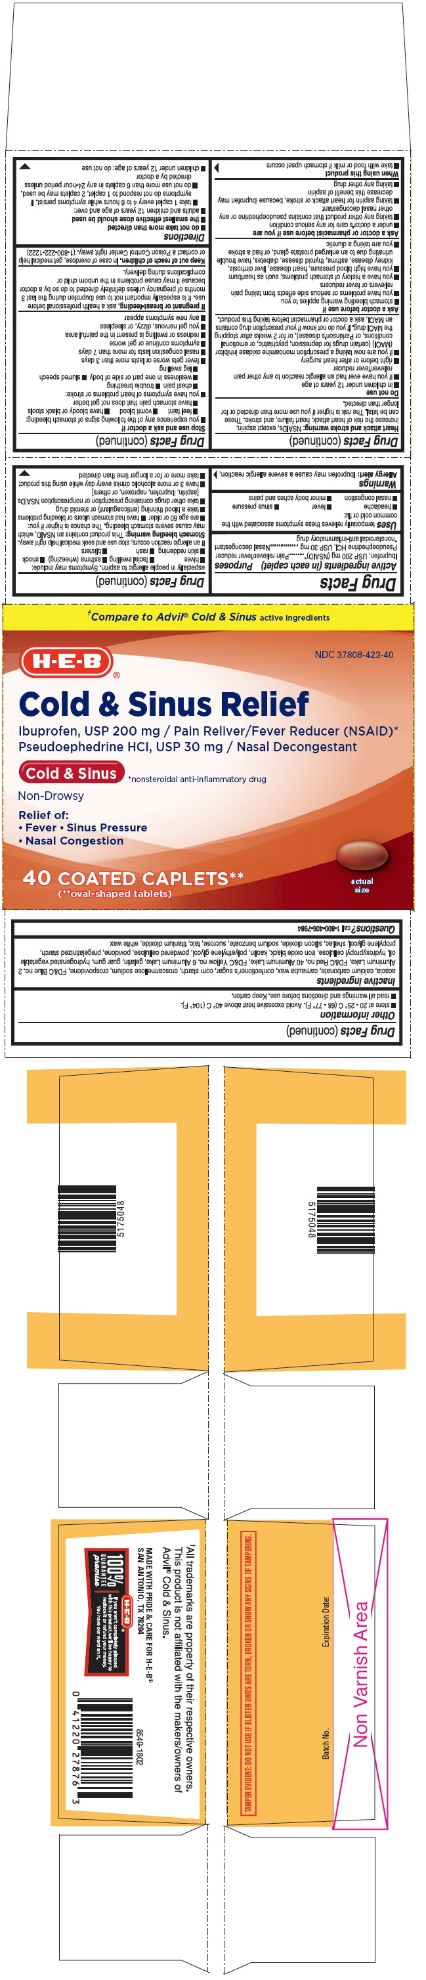 PRINCIPAL DISPLAY PANEL - 40 Caplet Blister Pack Carton